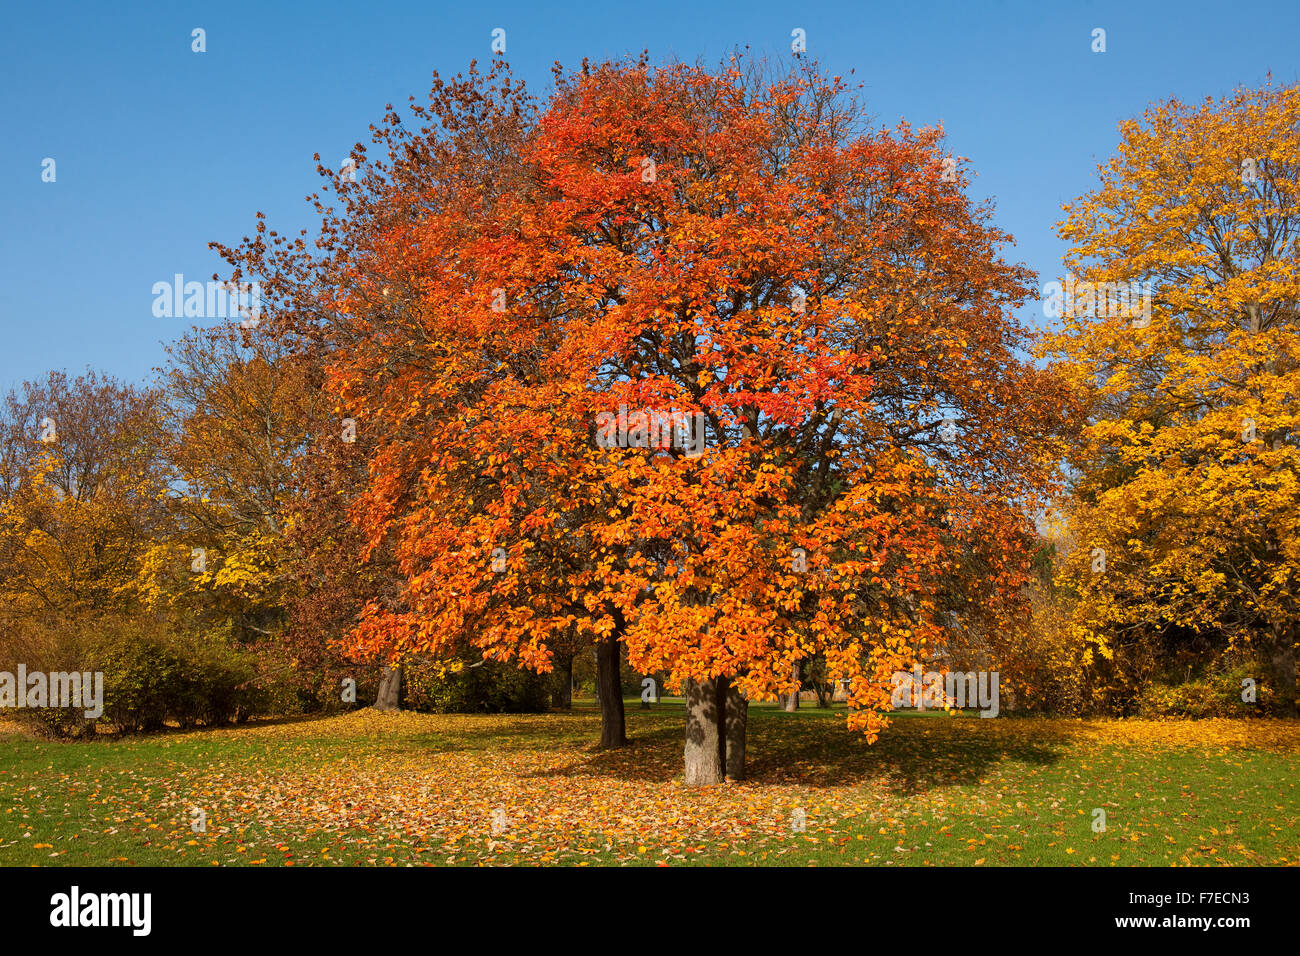 Swedish whitebeam (Sorbus intermedia) with autumnal colored leaves, Park, Erfurt, Thuringia, Germany Stock Photo